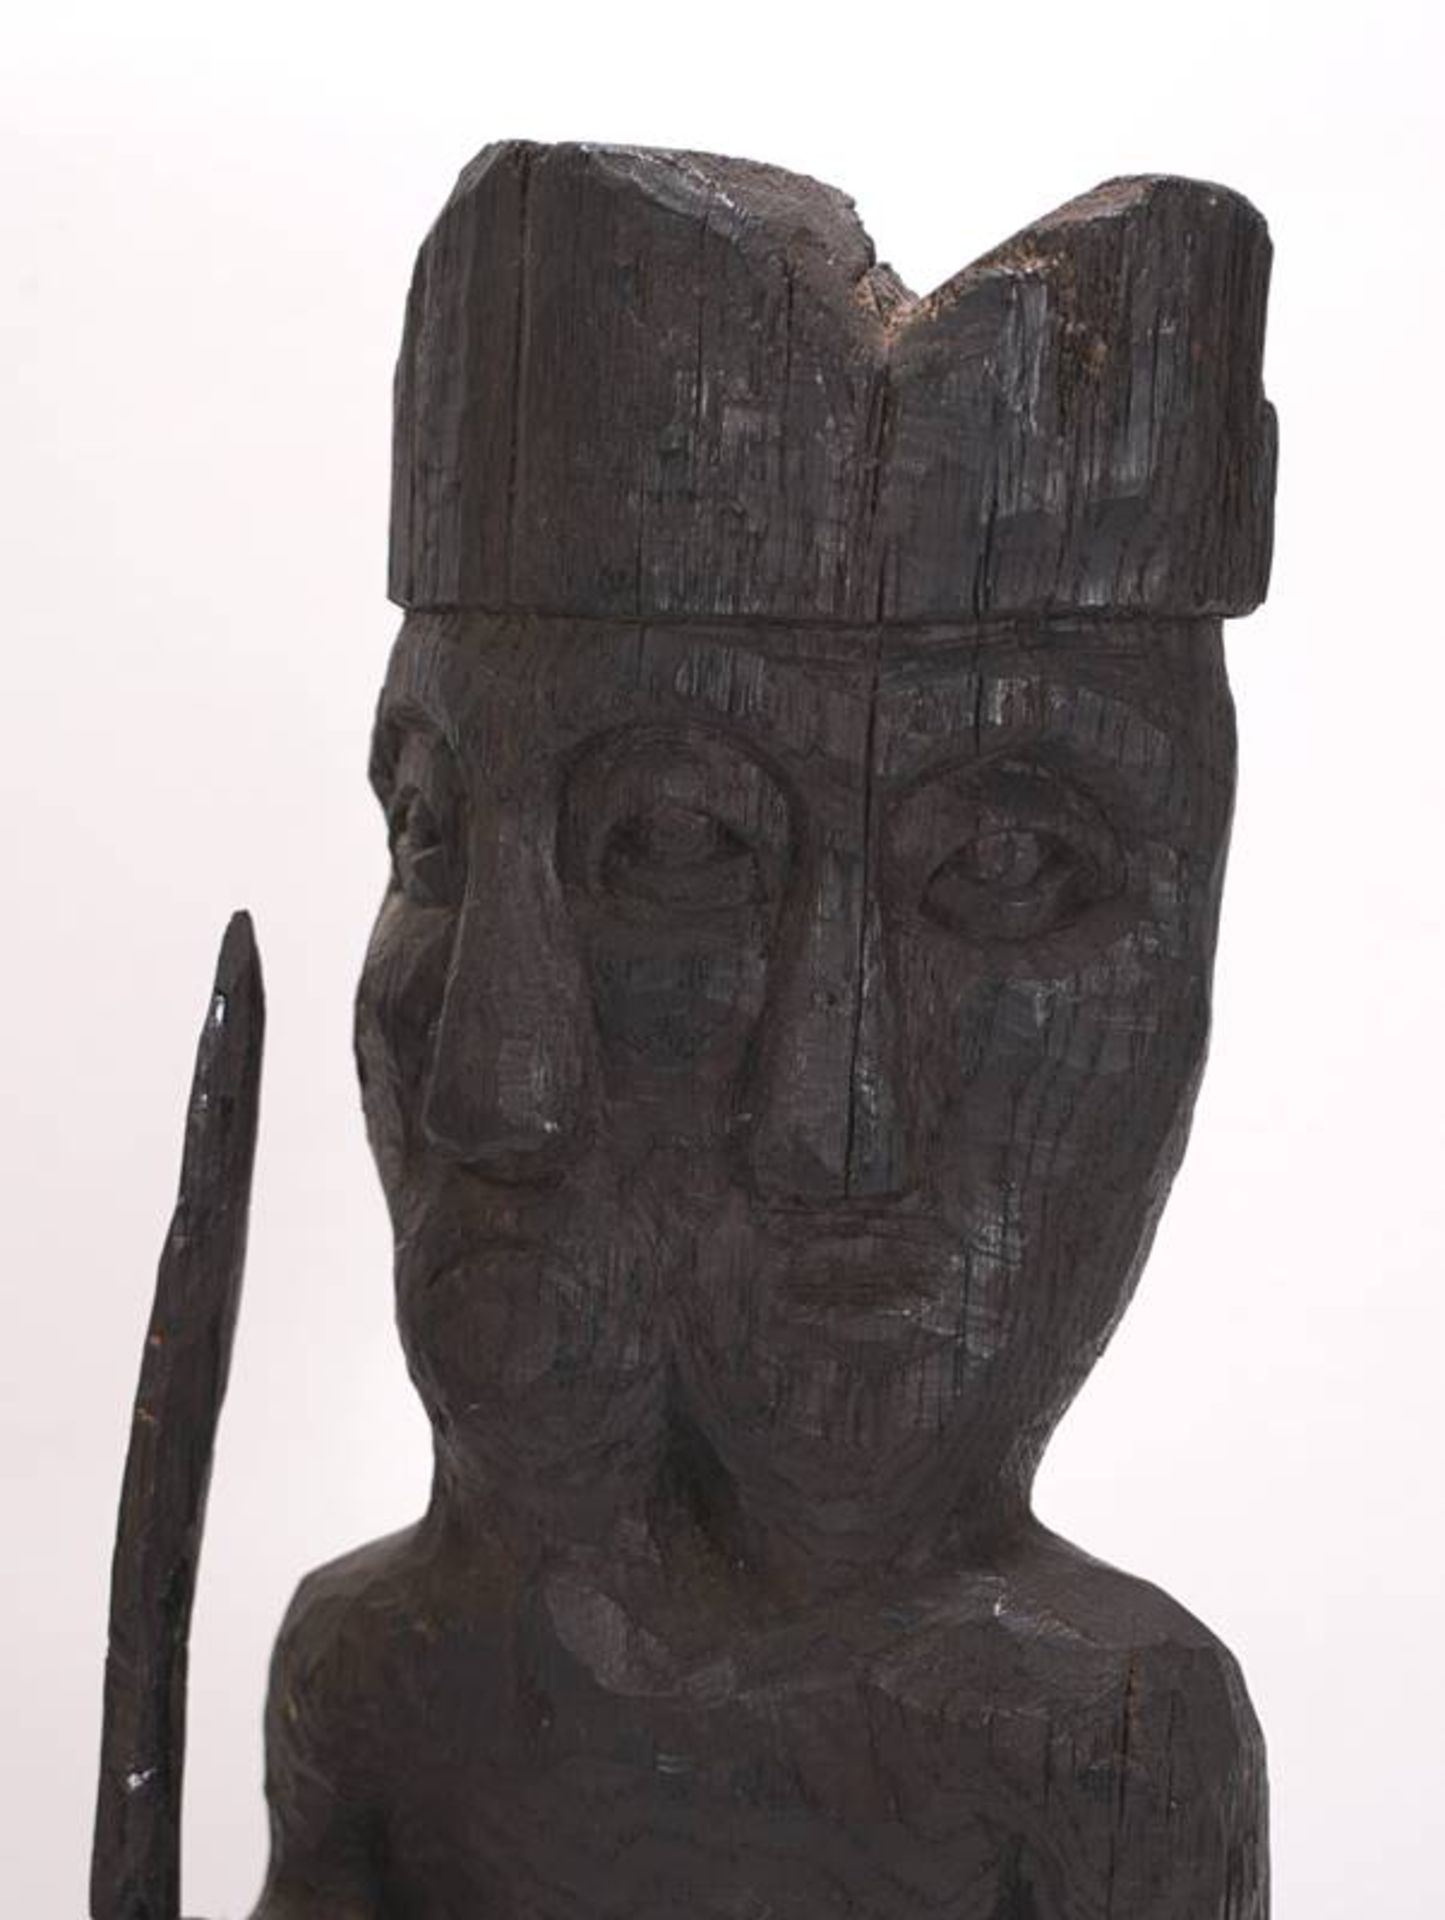 Wooden figure - Image 3 of 4